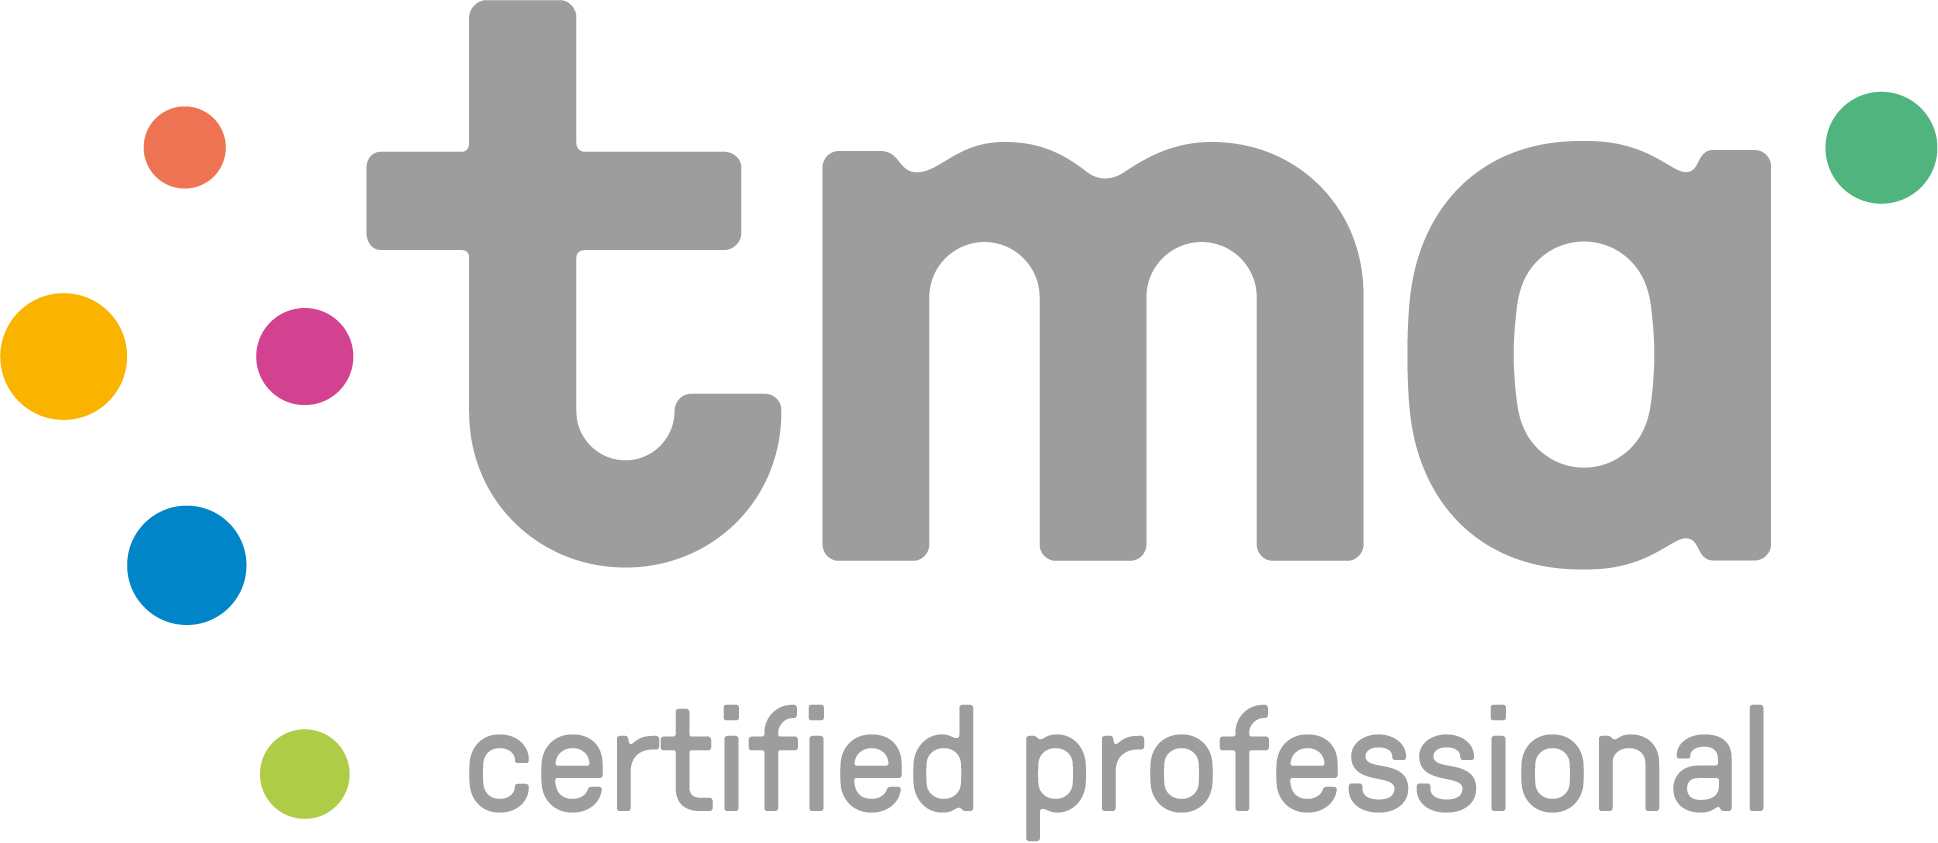 TMA-Certified-professional